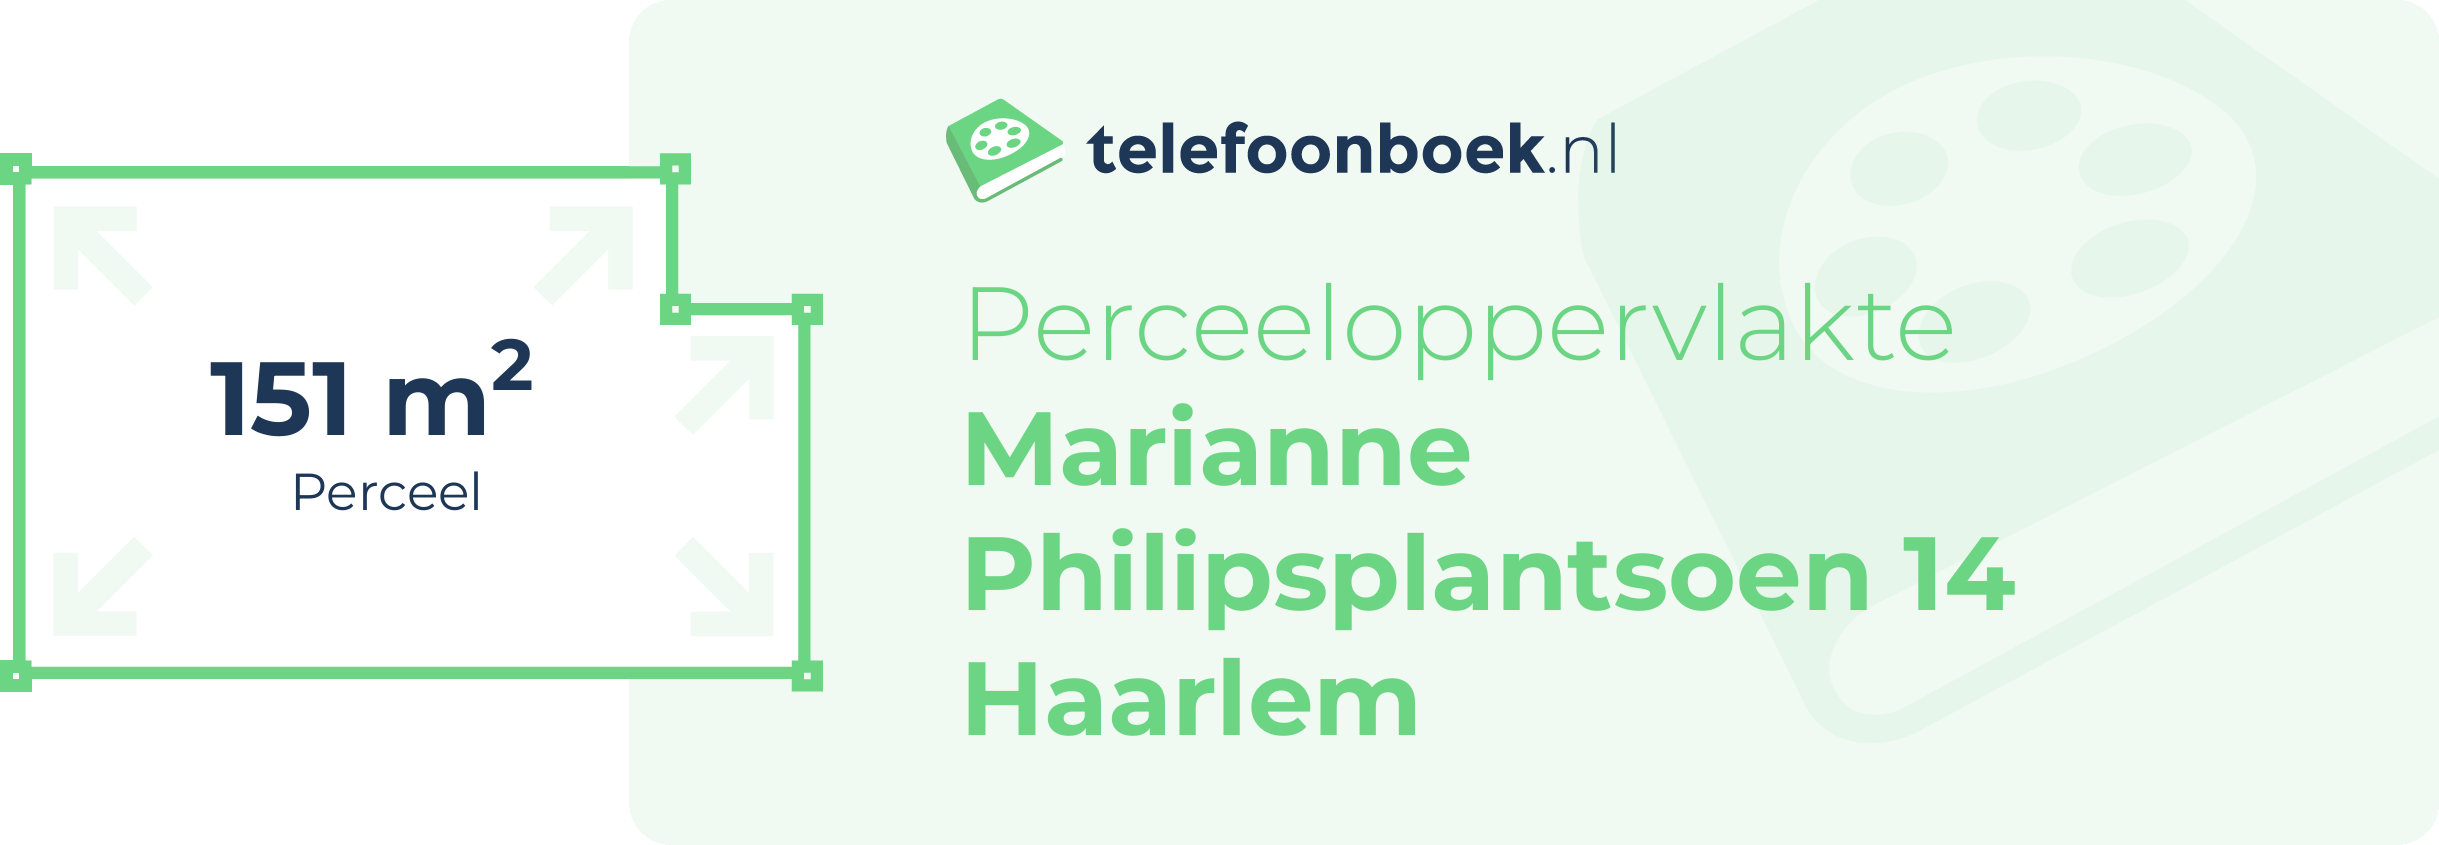 Perceeloppervlakte Marianne Philipsplantsoen 14 Haarlem